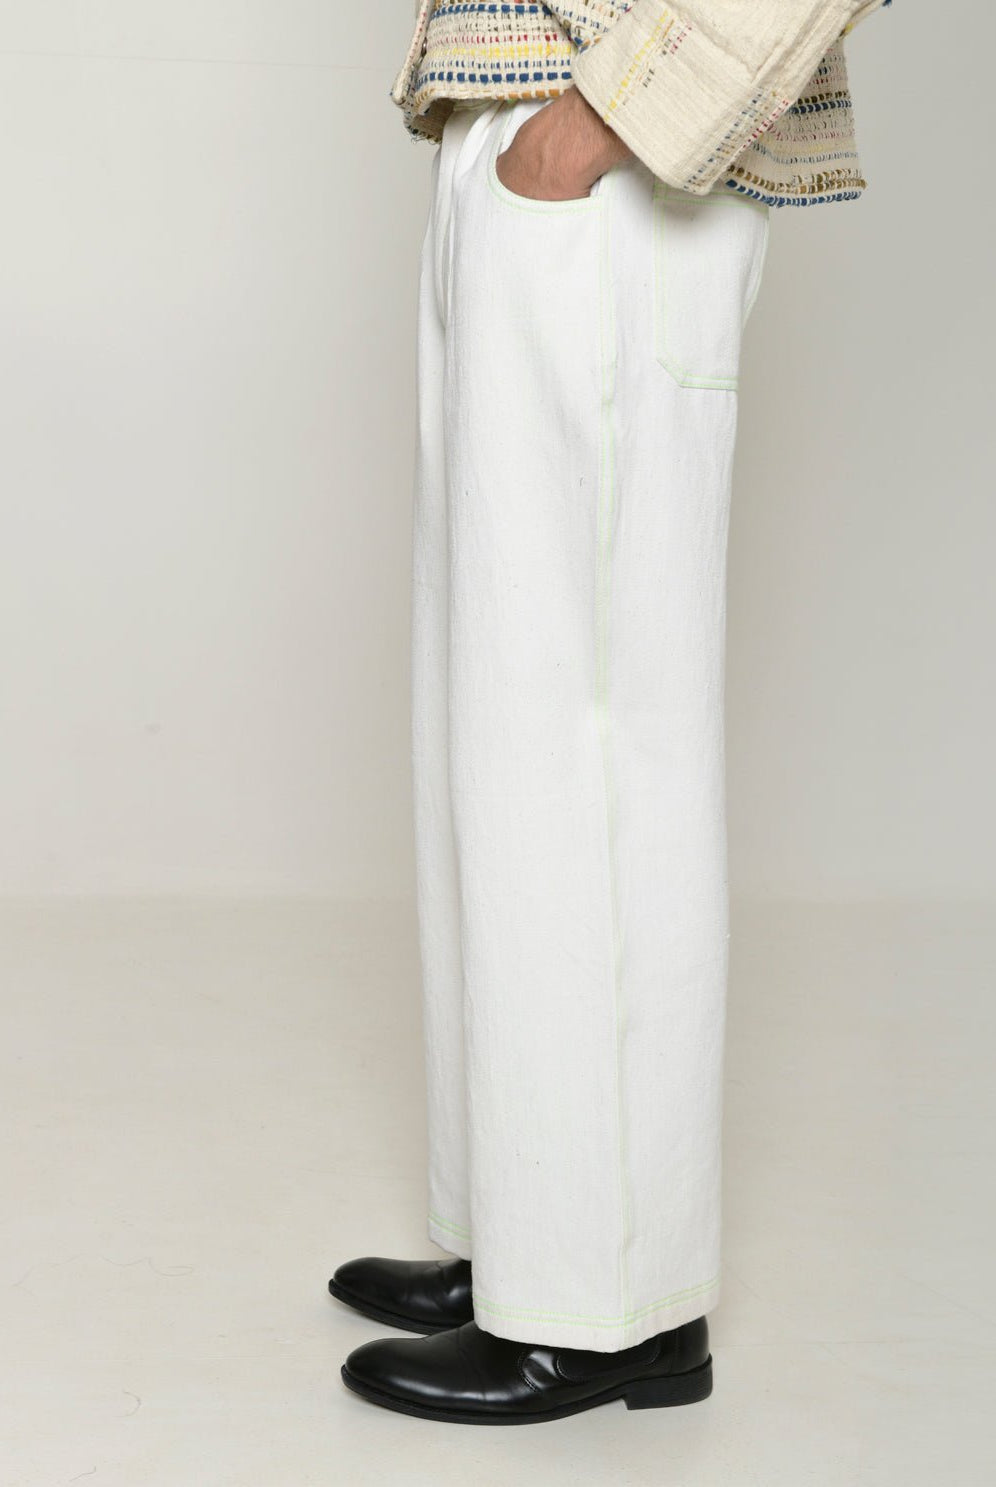 Recycle Hibiki Unisex White Pants - CiceroniPantsRias Jaipur